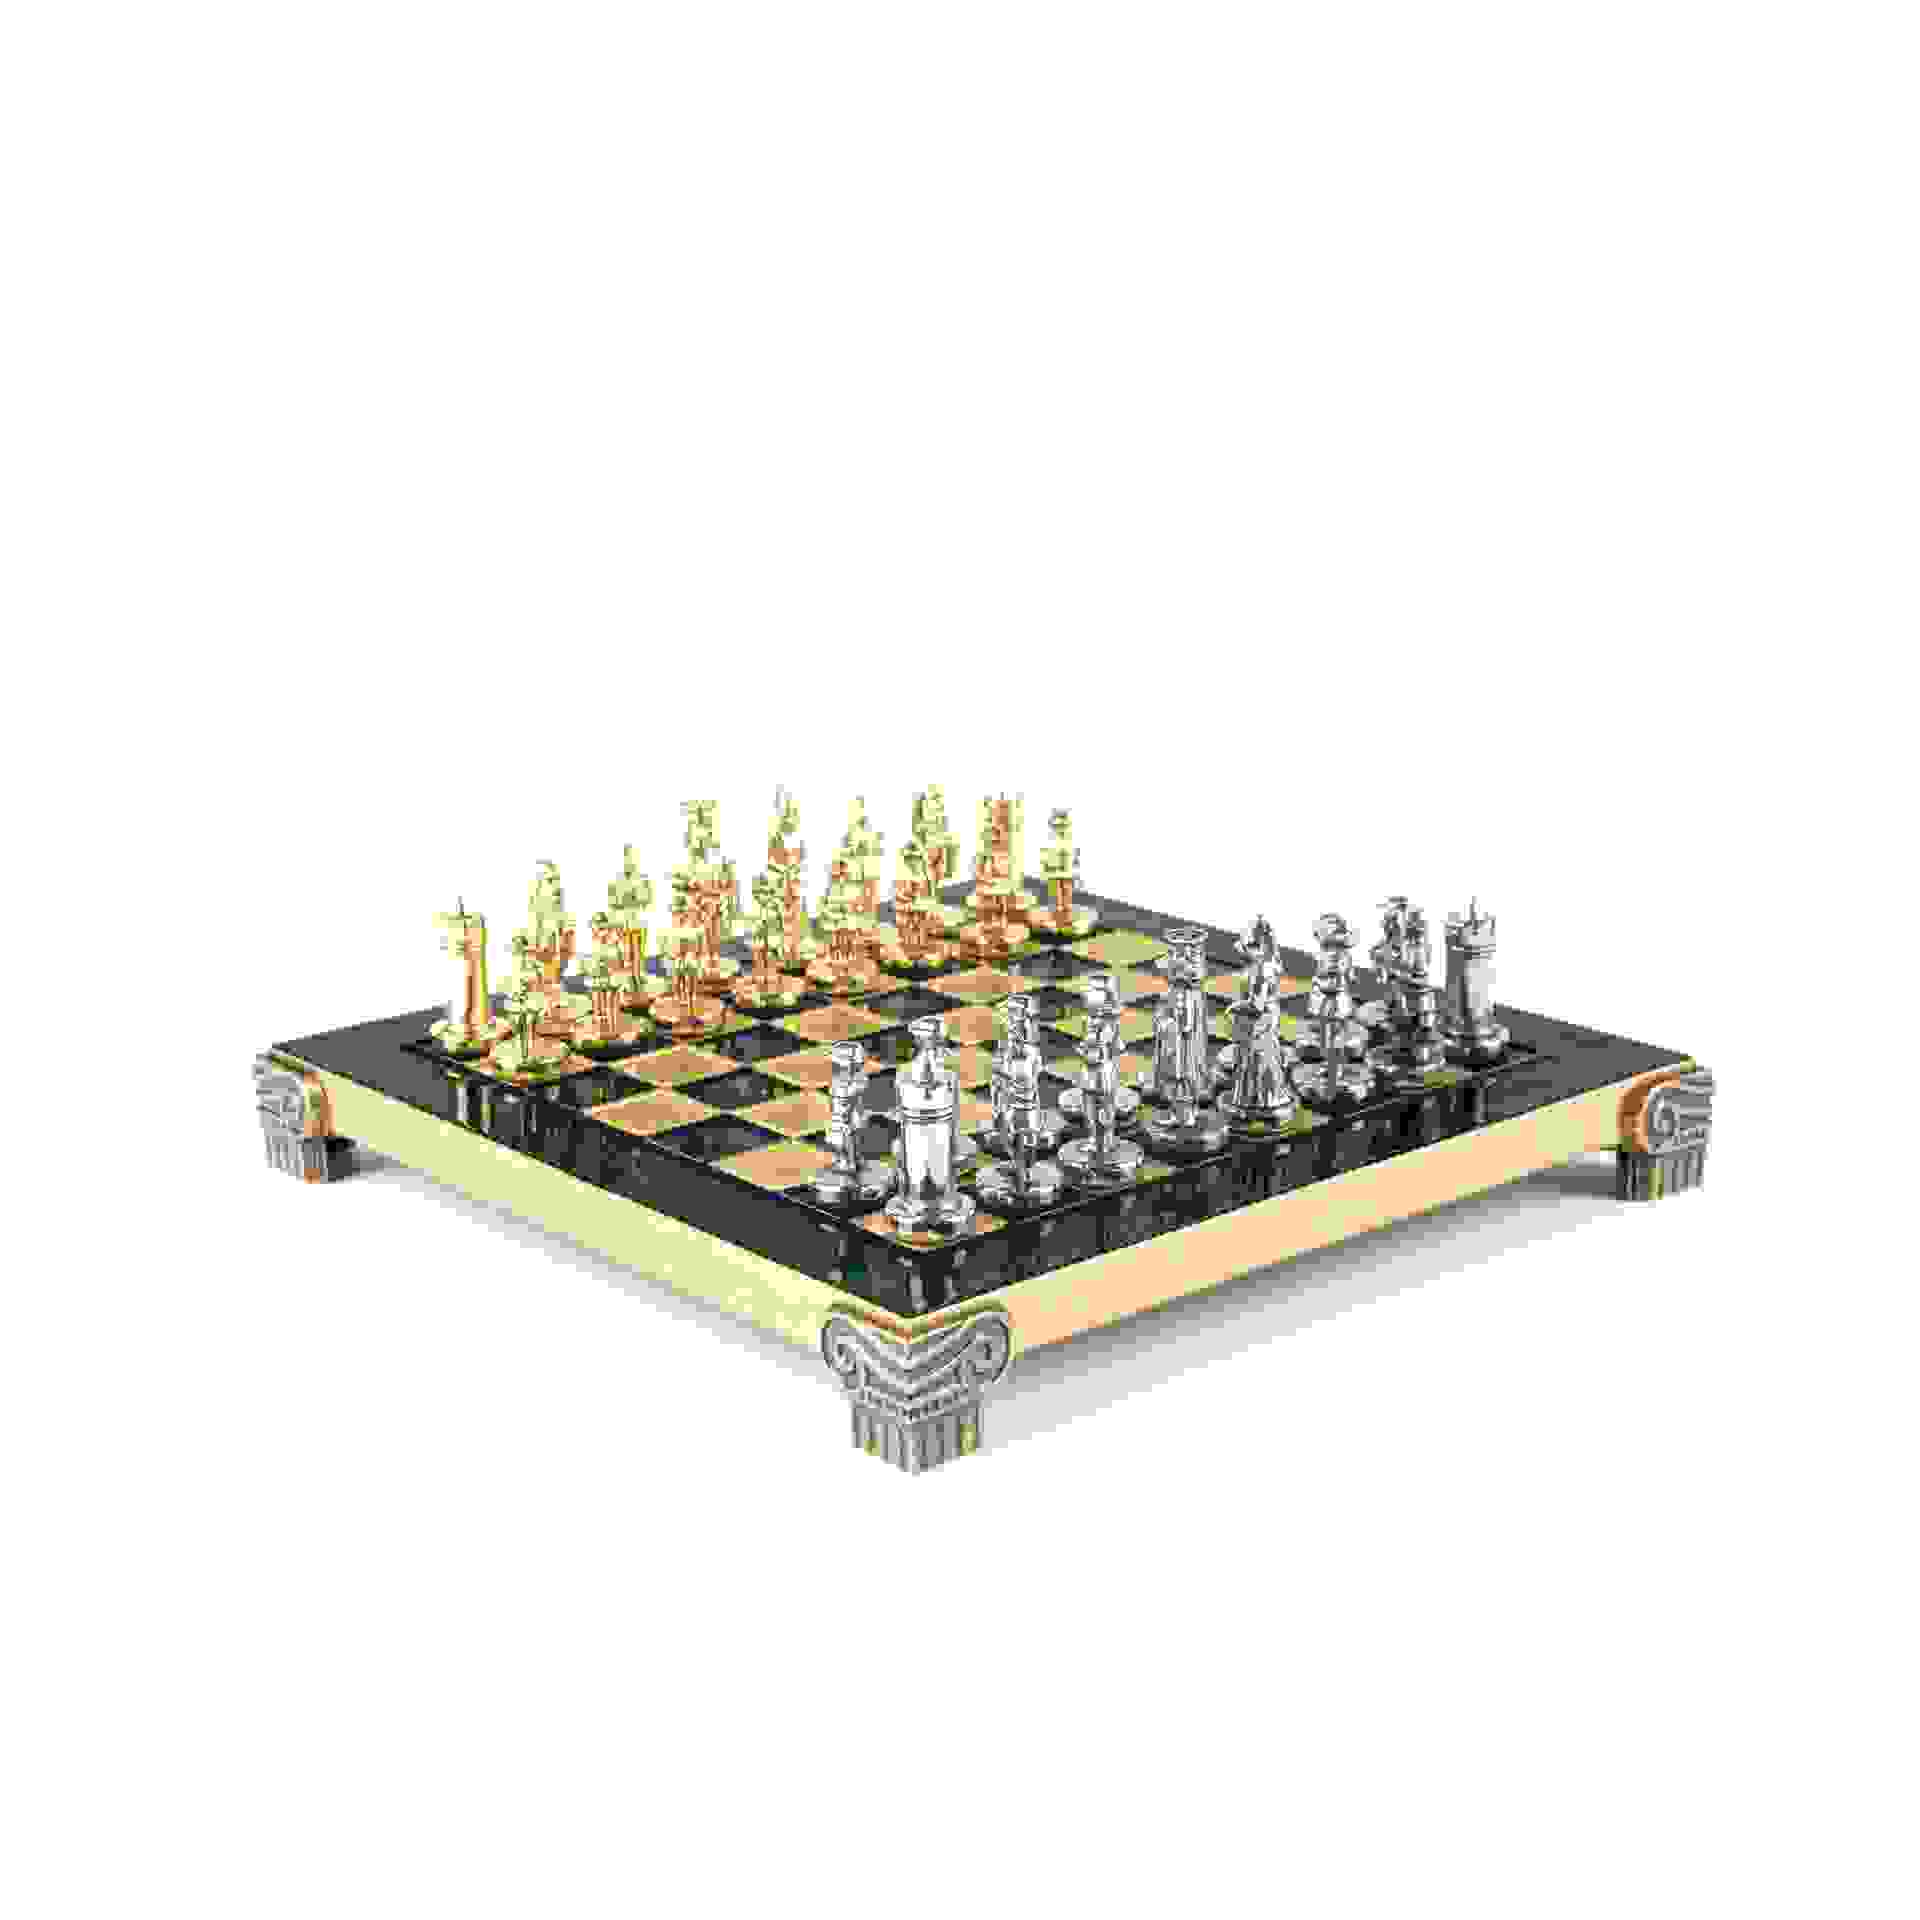 Byzantine Metal Chess Set 20x20cm Green